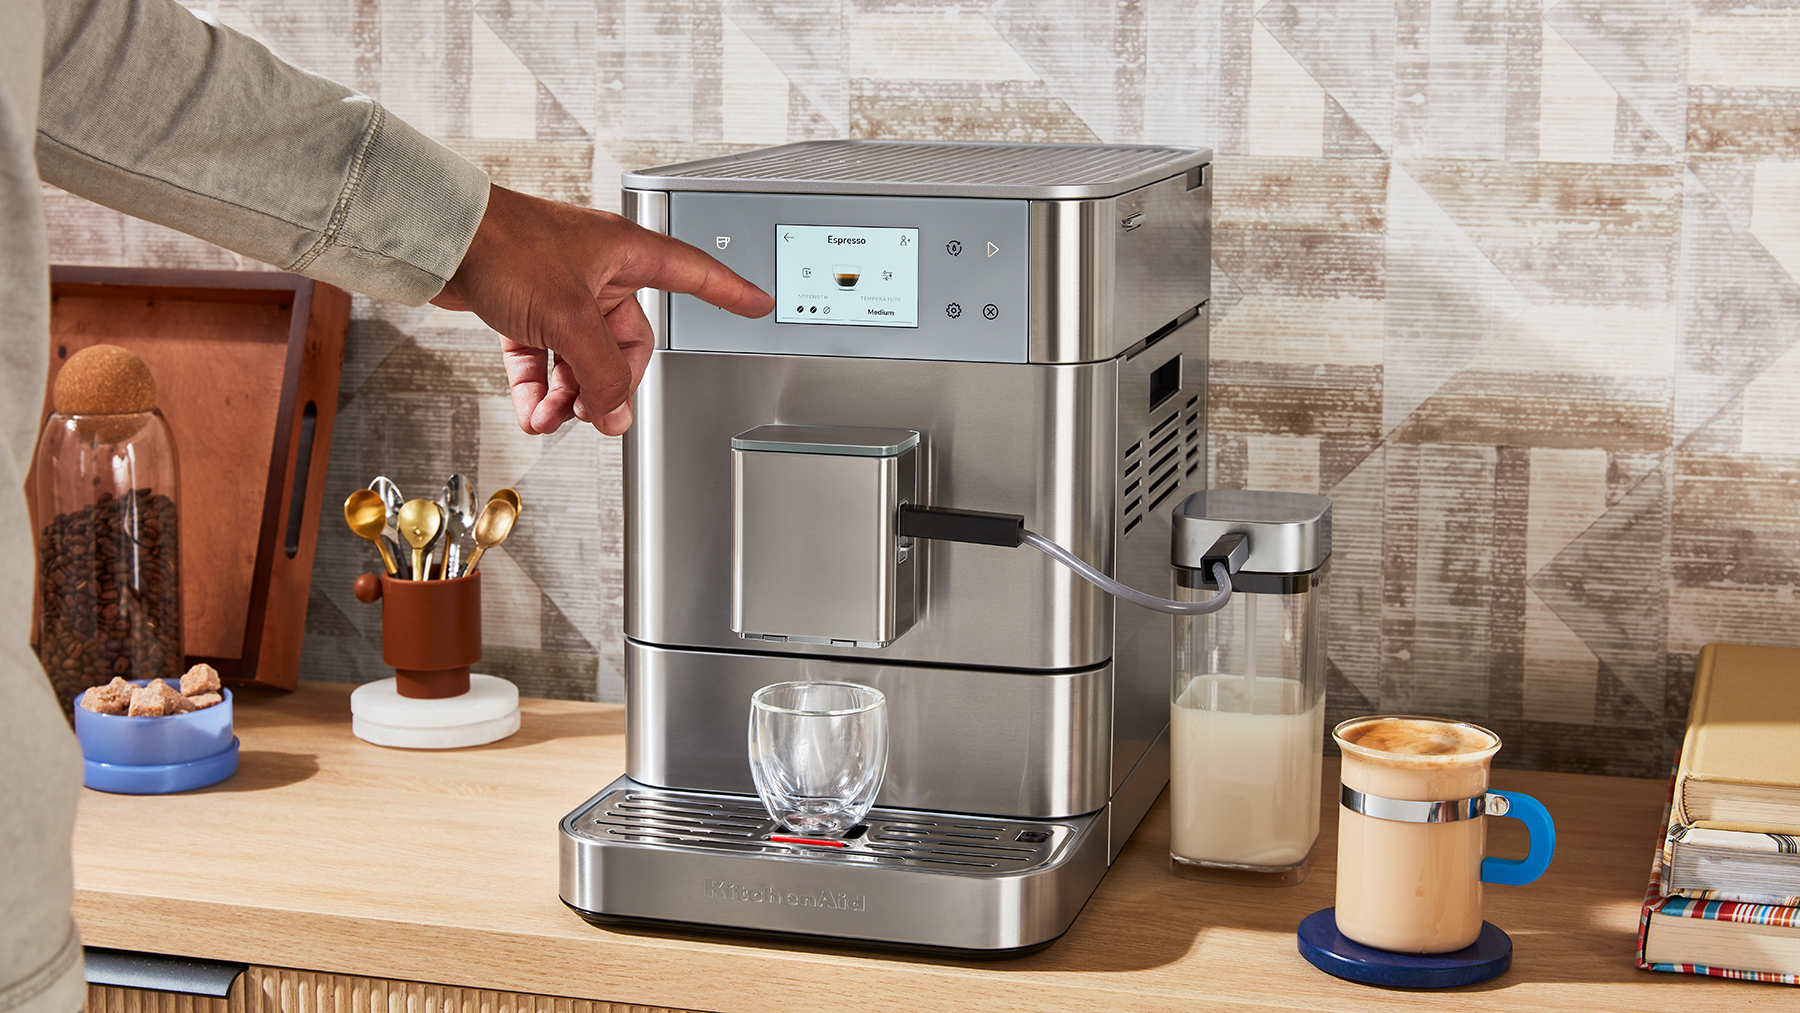 KitchenAid's KF7 espresso machine